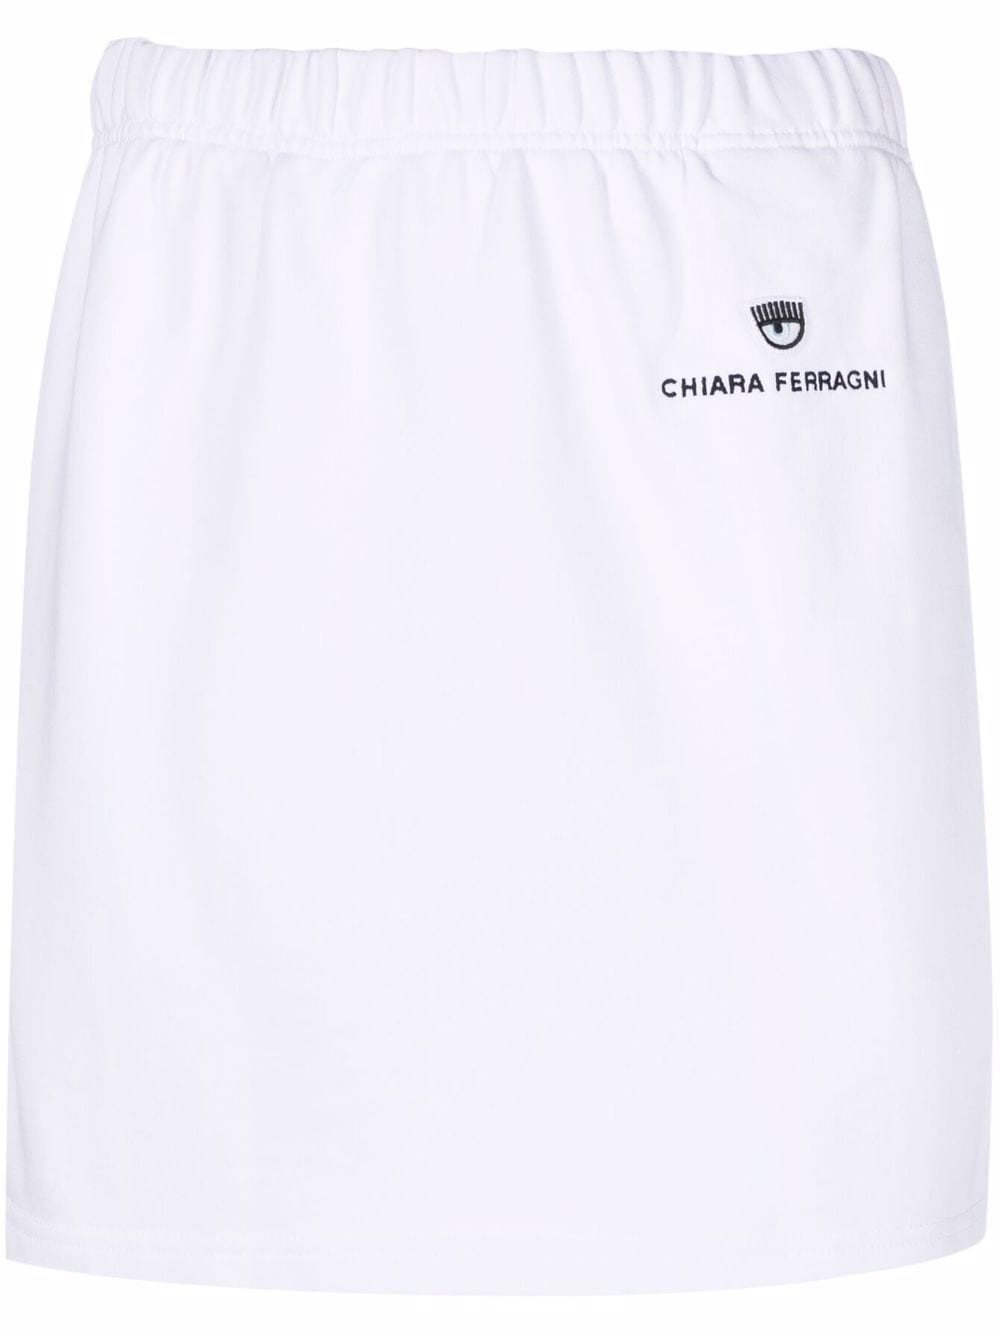 фото Chiara ferragni спортивная юбка с логотипом